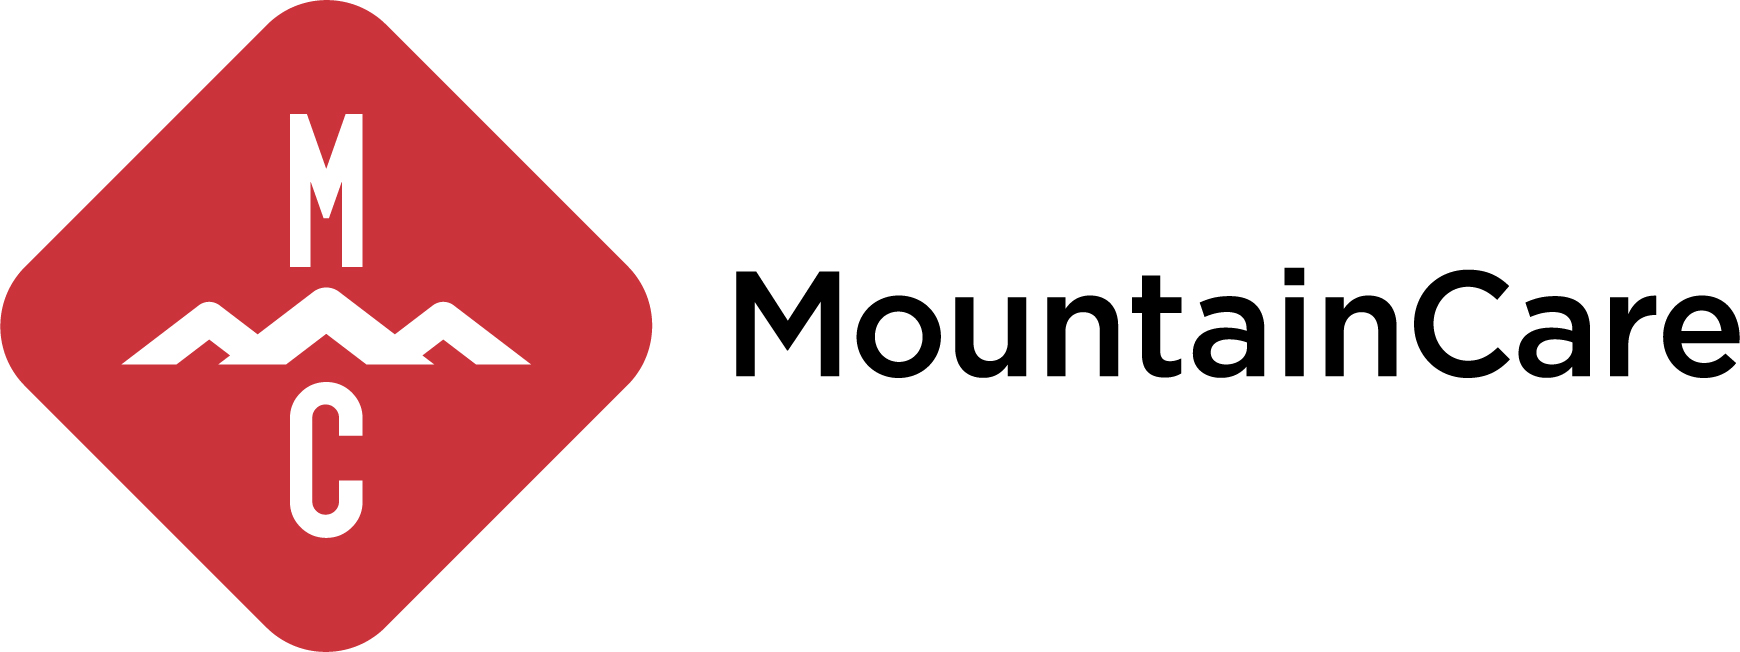 MountainCare, Inc. logo